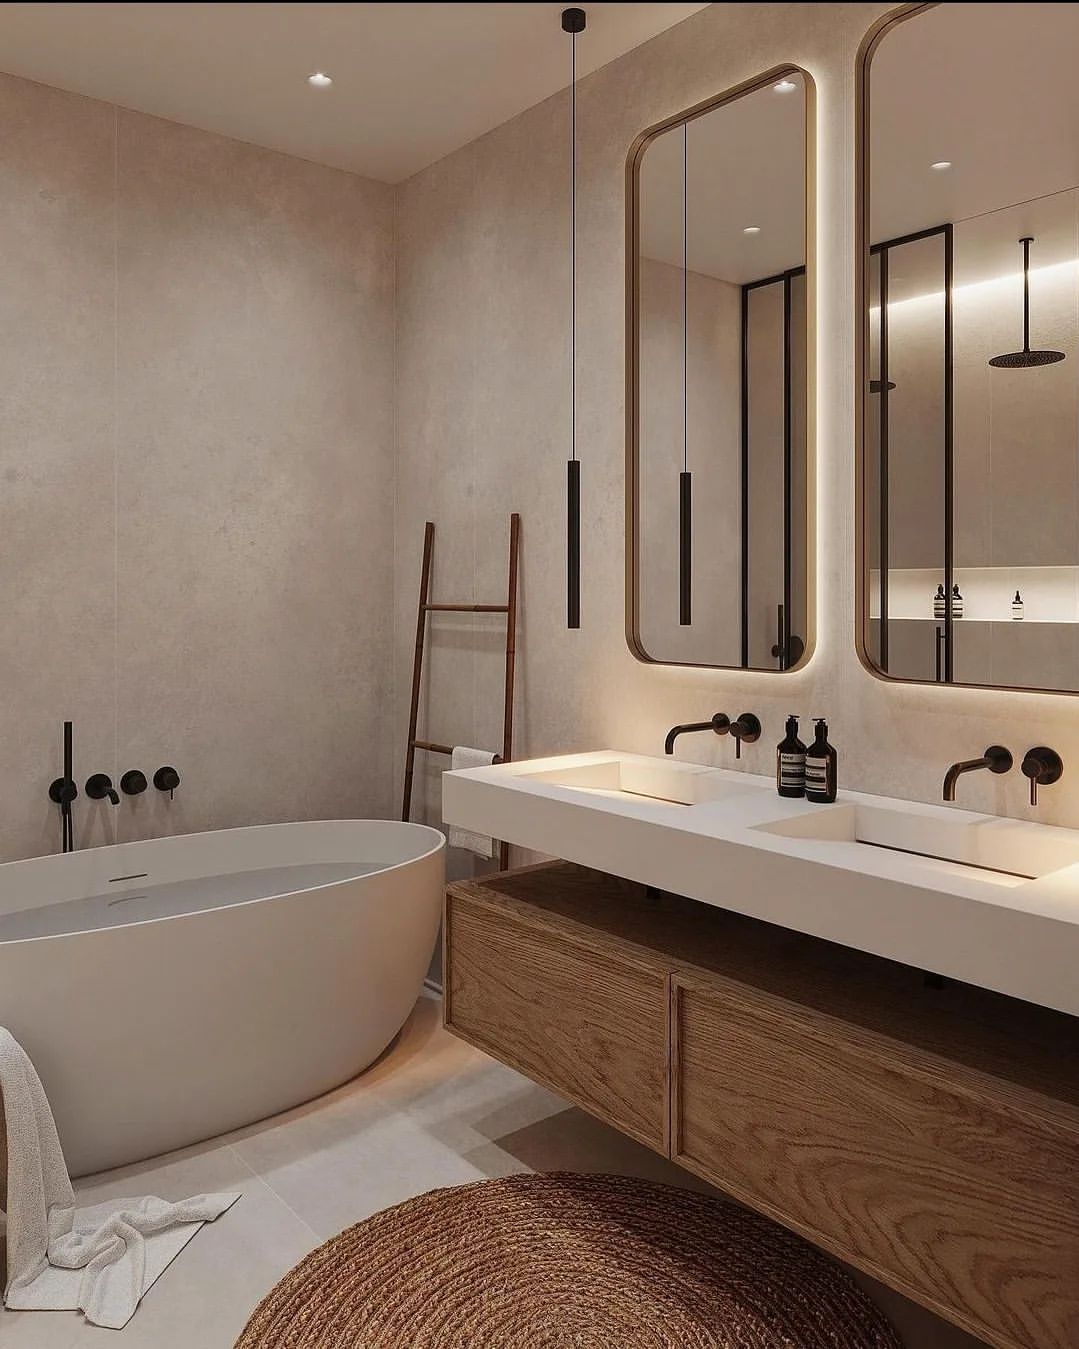 Innovative Styles: The Latest in Modern
Bathroom Sinks